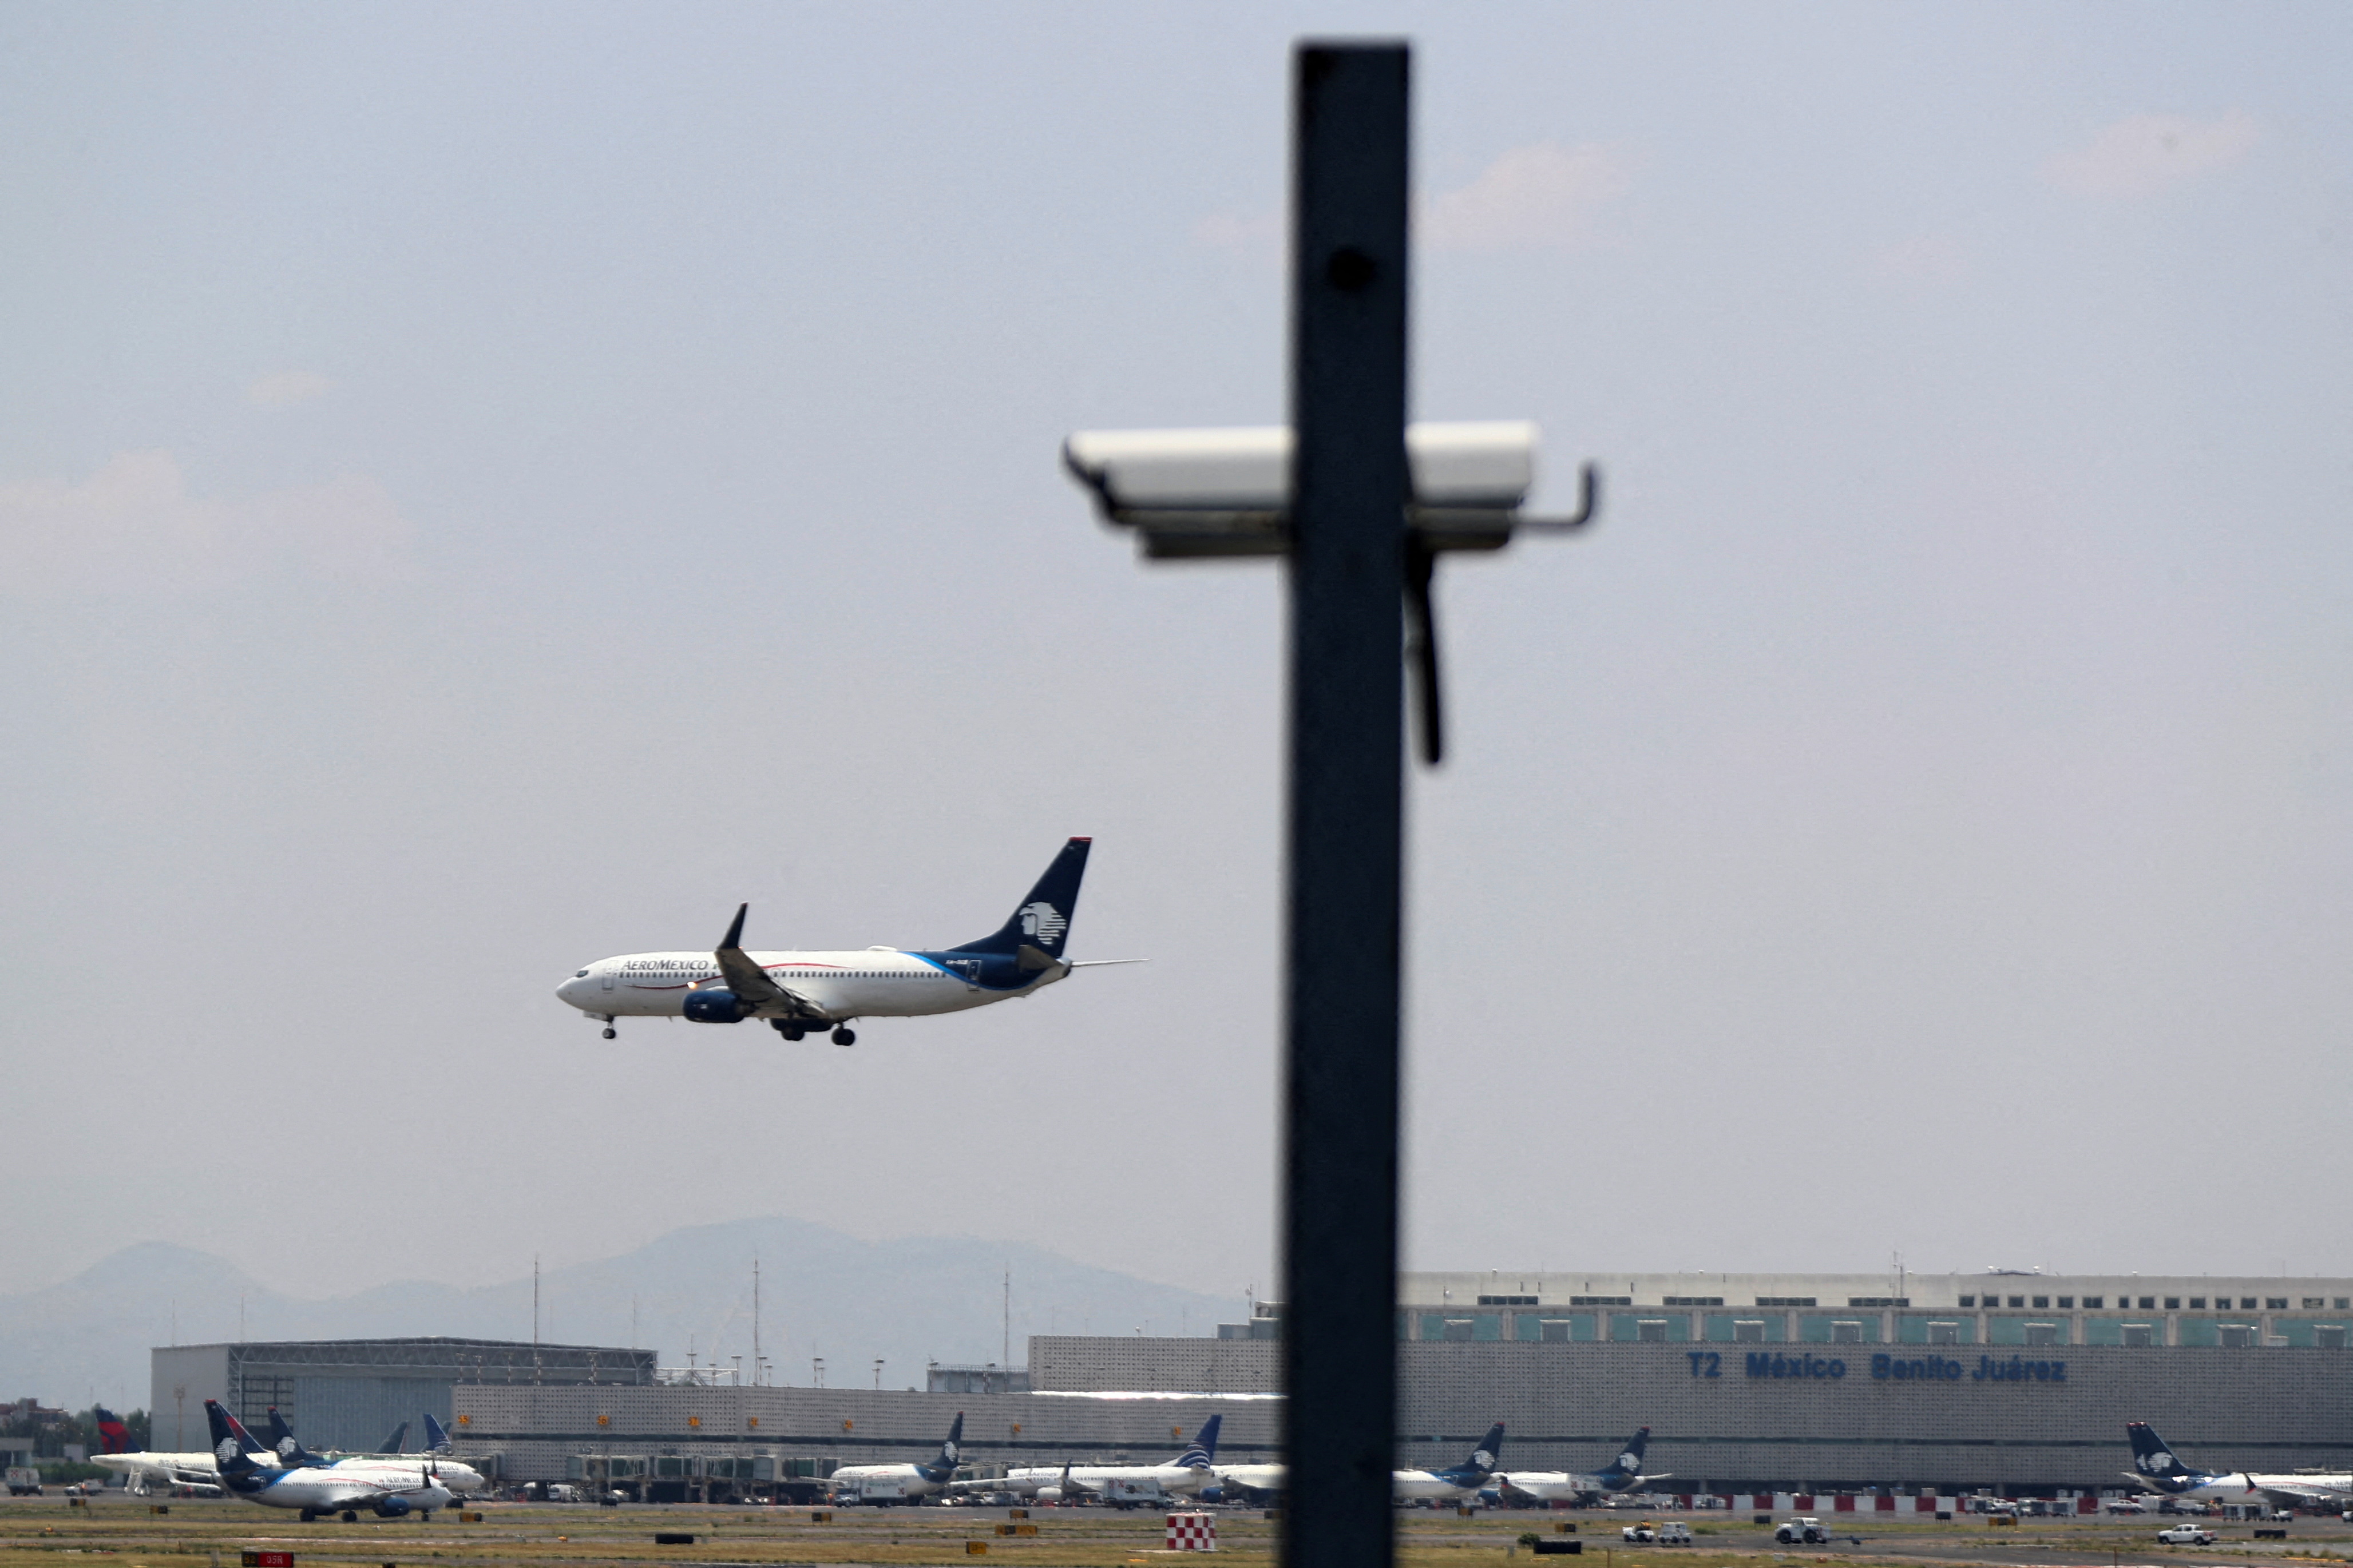 An AeroMexico airplane prepares to land on the airstrip at Benito Juarez international airport in Mexico City